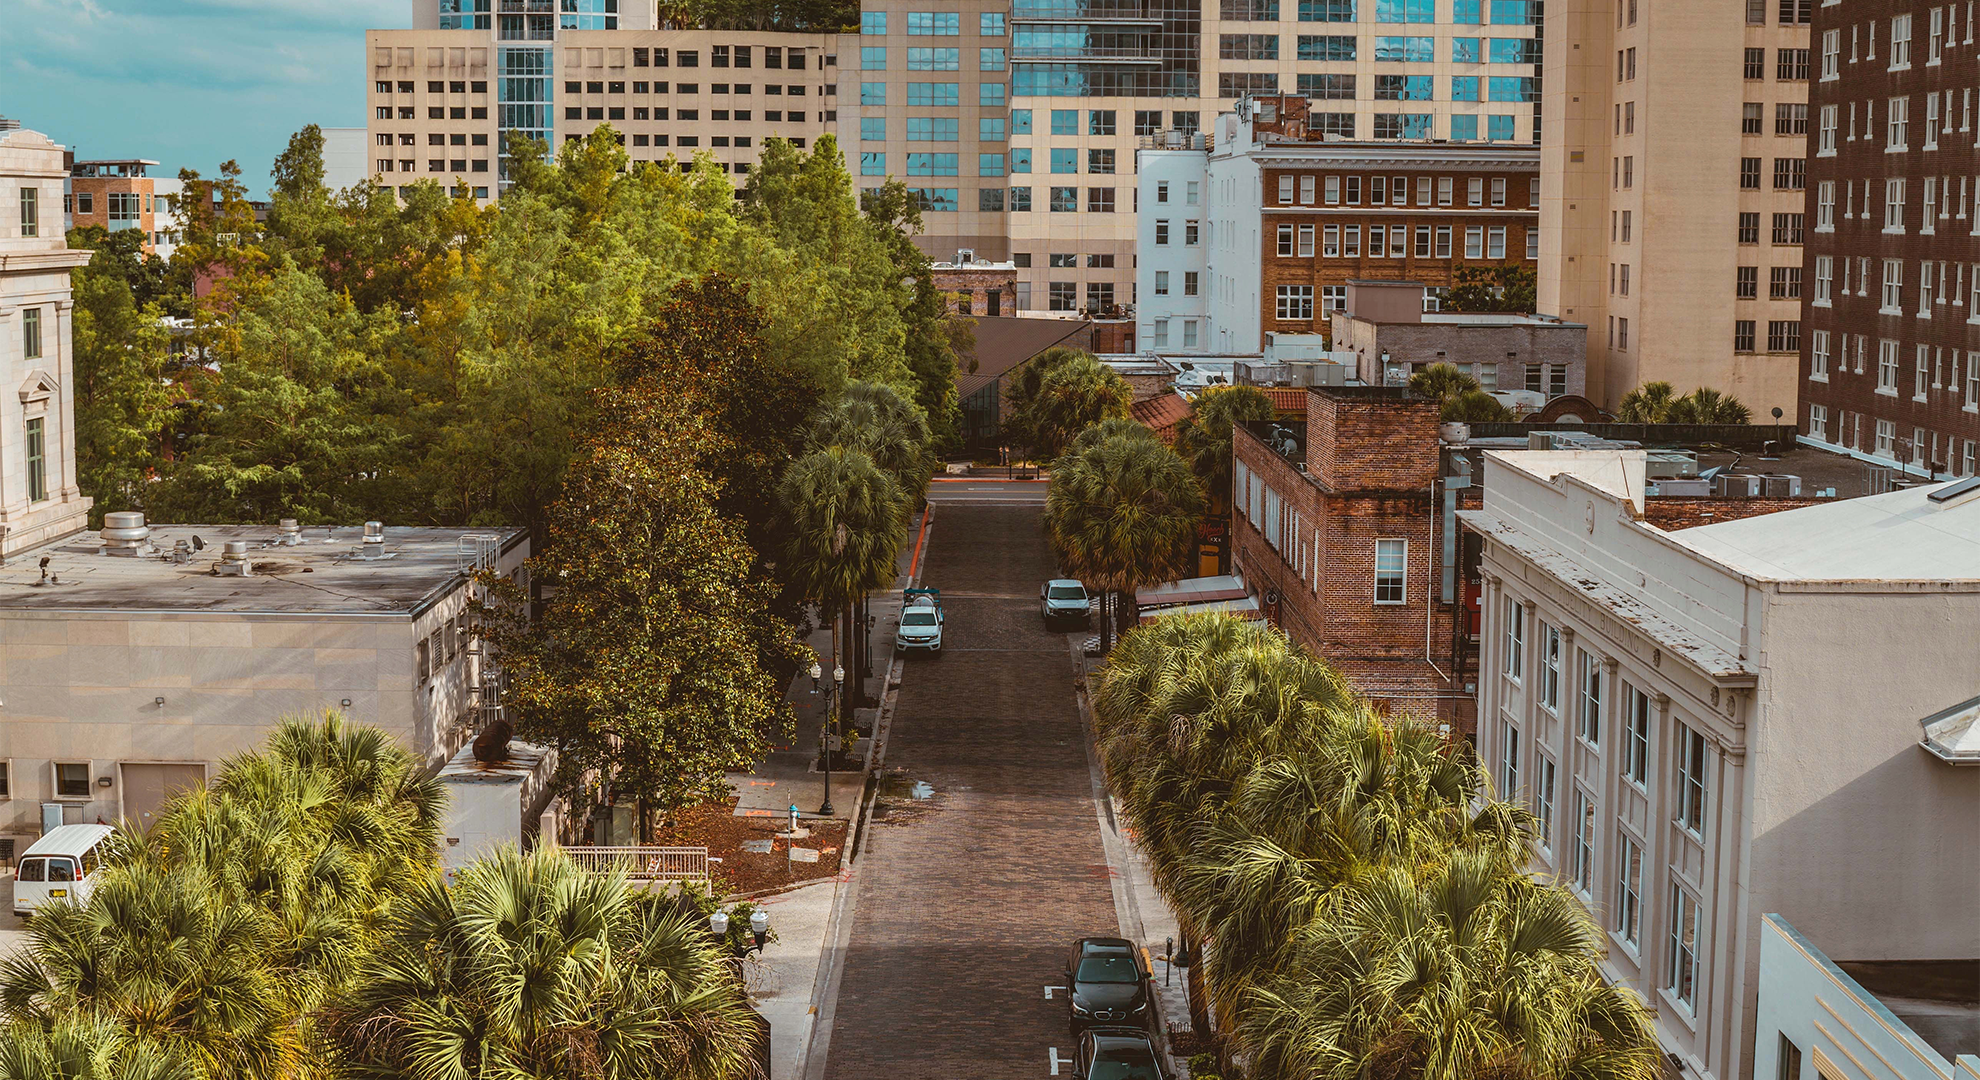 Aerial view of Orlando street